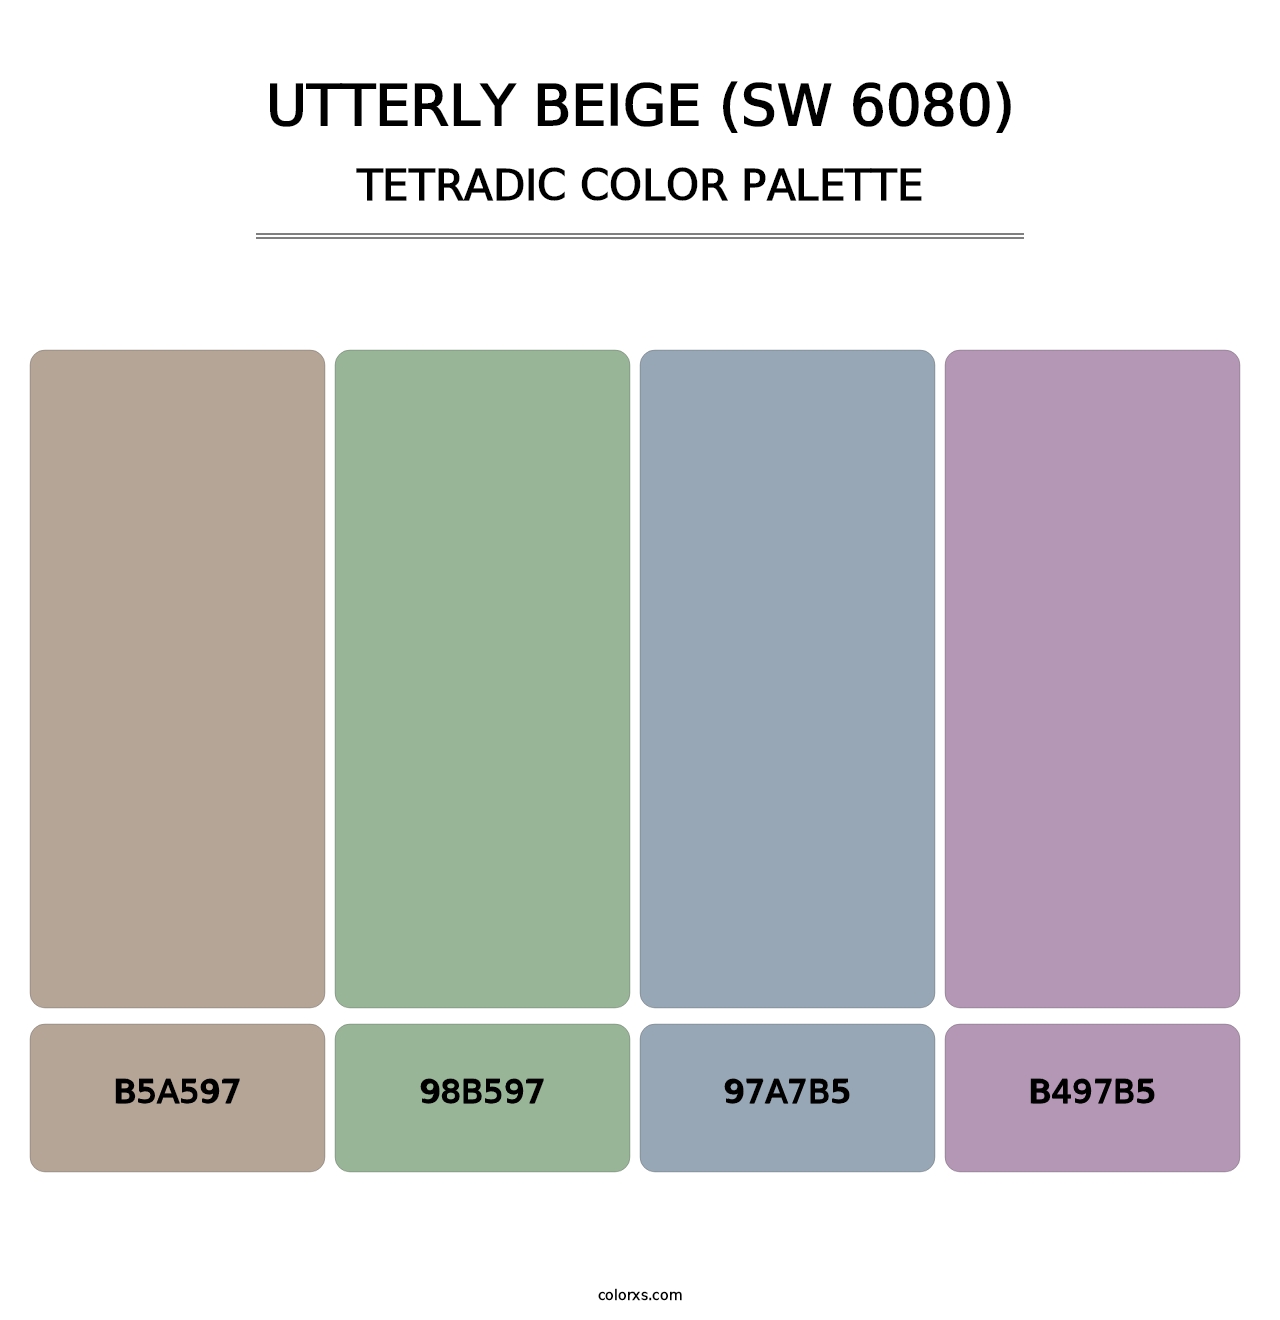 Utterly Beige (SW 6080) - Tetradic Color Palette